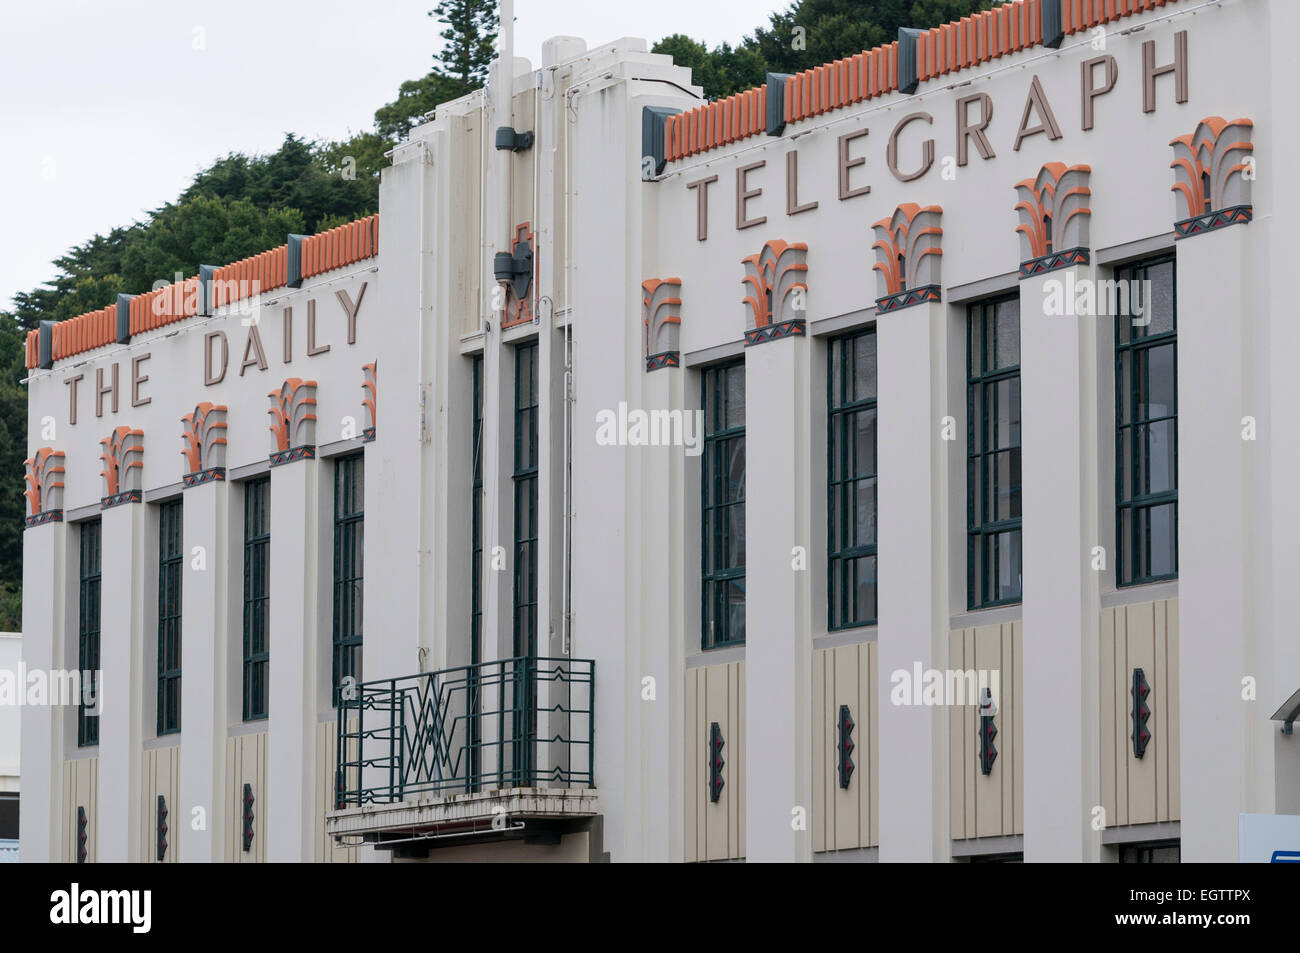 The Daily Telegraph Building, Tennyson Street, Napier, Hawkes Bay, North Island, New Zealand. Stock Photo